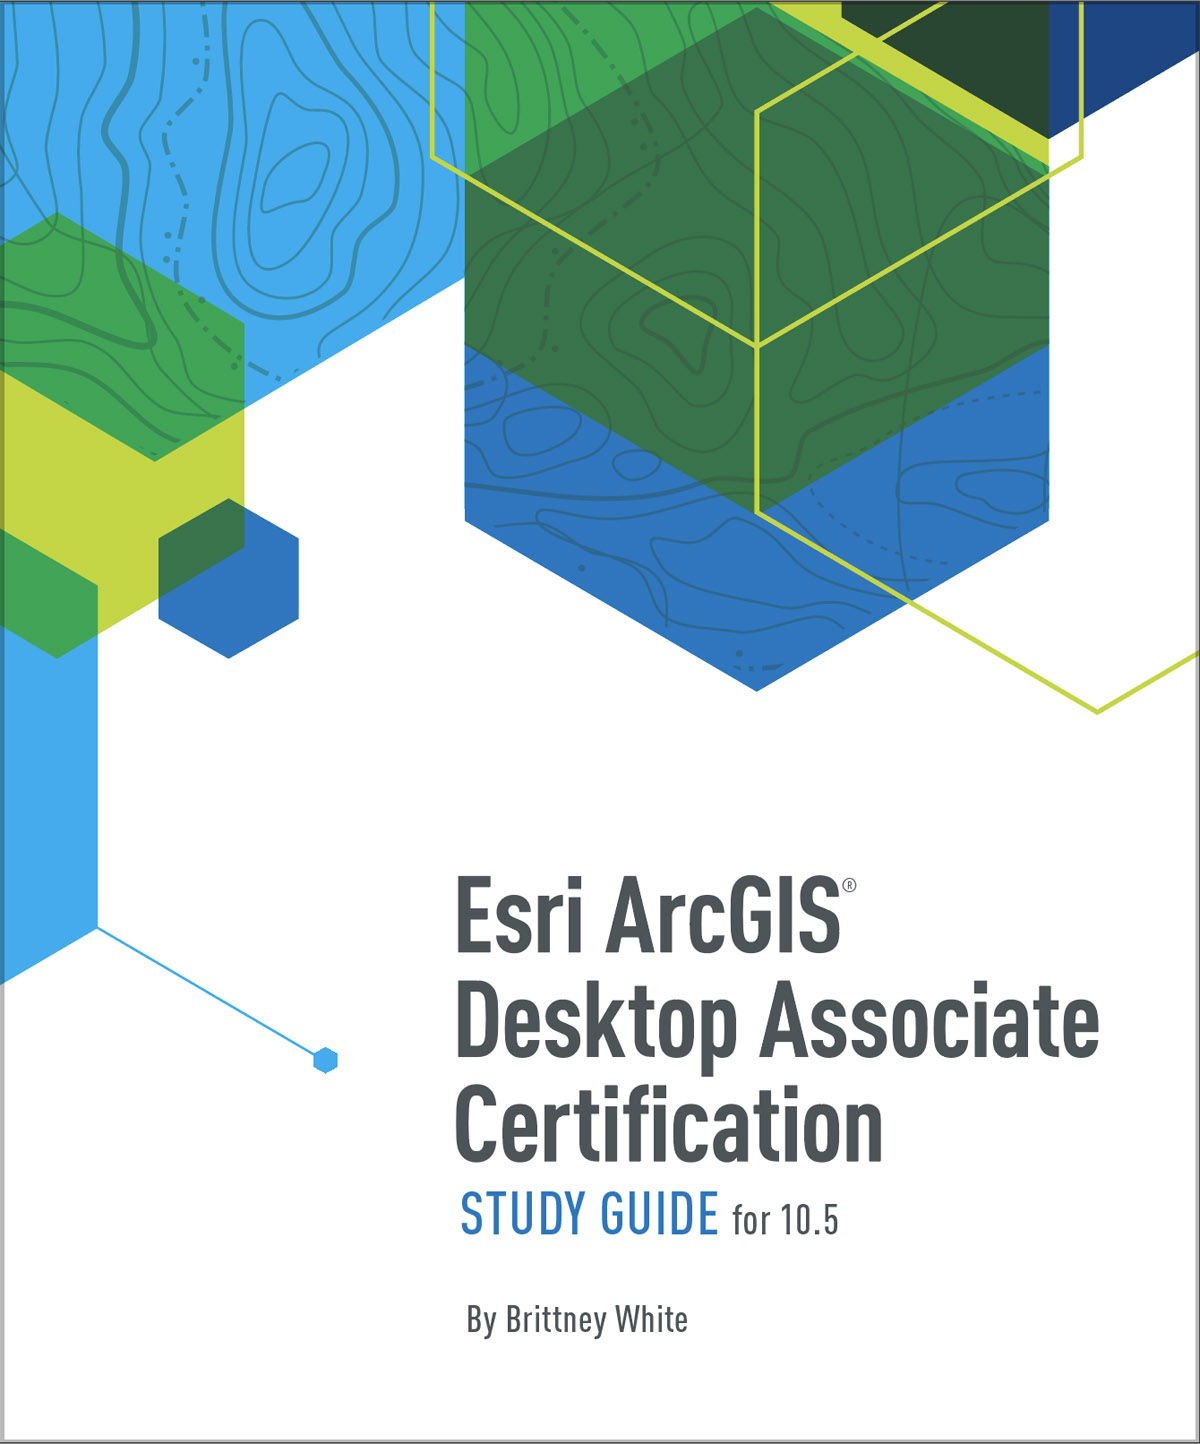 Esri ArcGIS Desktop Associate Certification Study Guide for 10.5